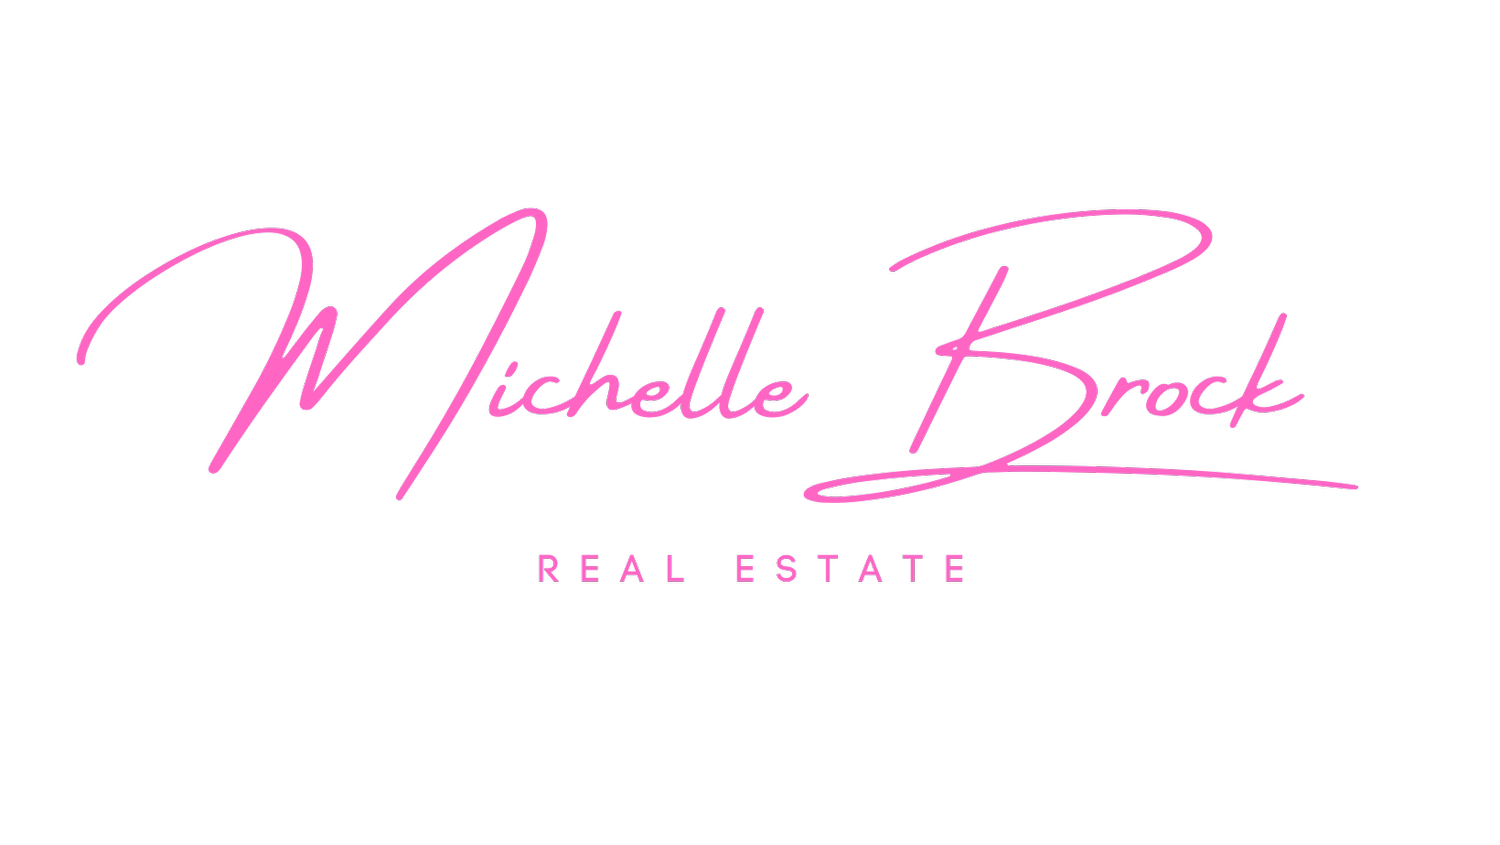 Michelle Brock Real Estate